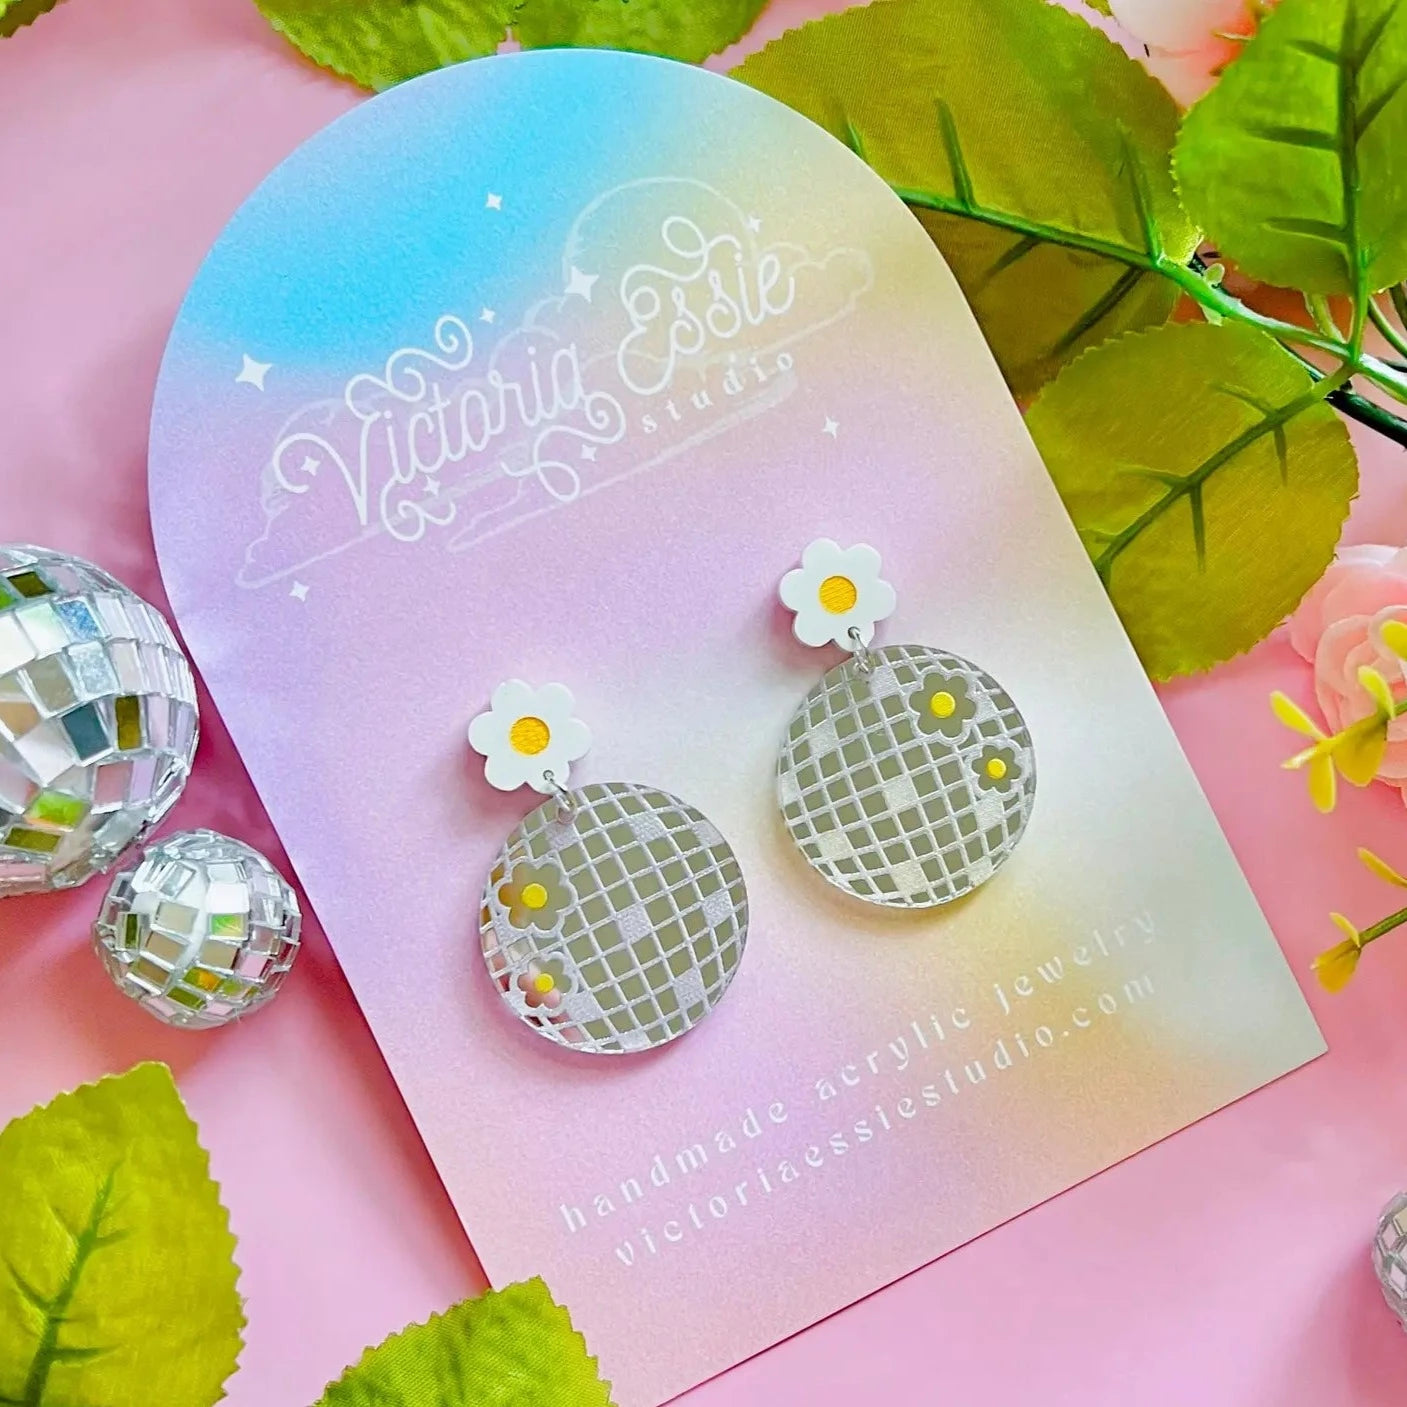 Flower Disco Ball Earrings by Victoria Essie Studios